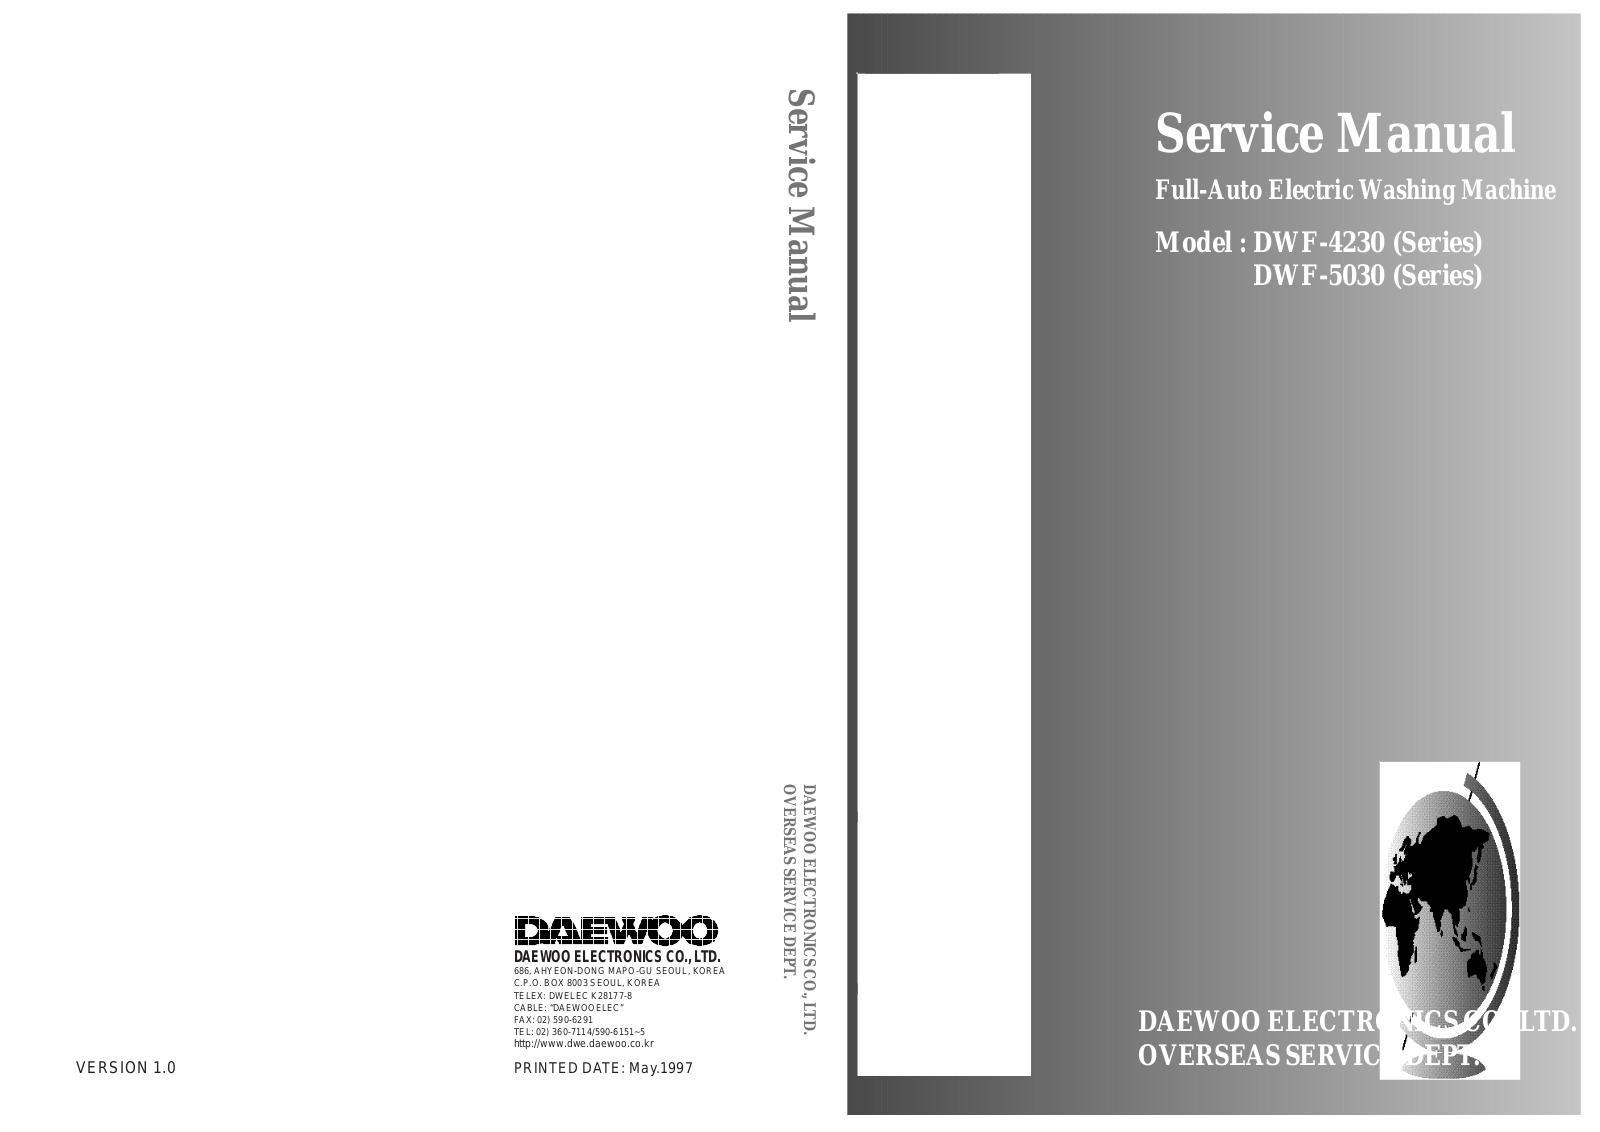 DAEWOO DWF-4230, DWF-5030 Service Manual